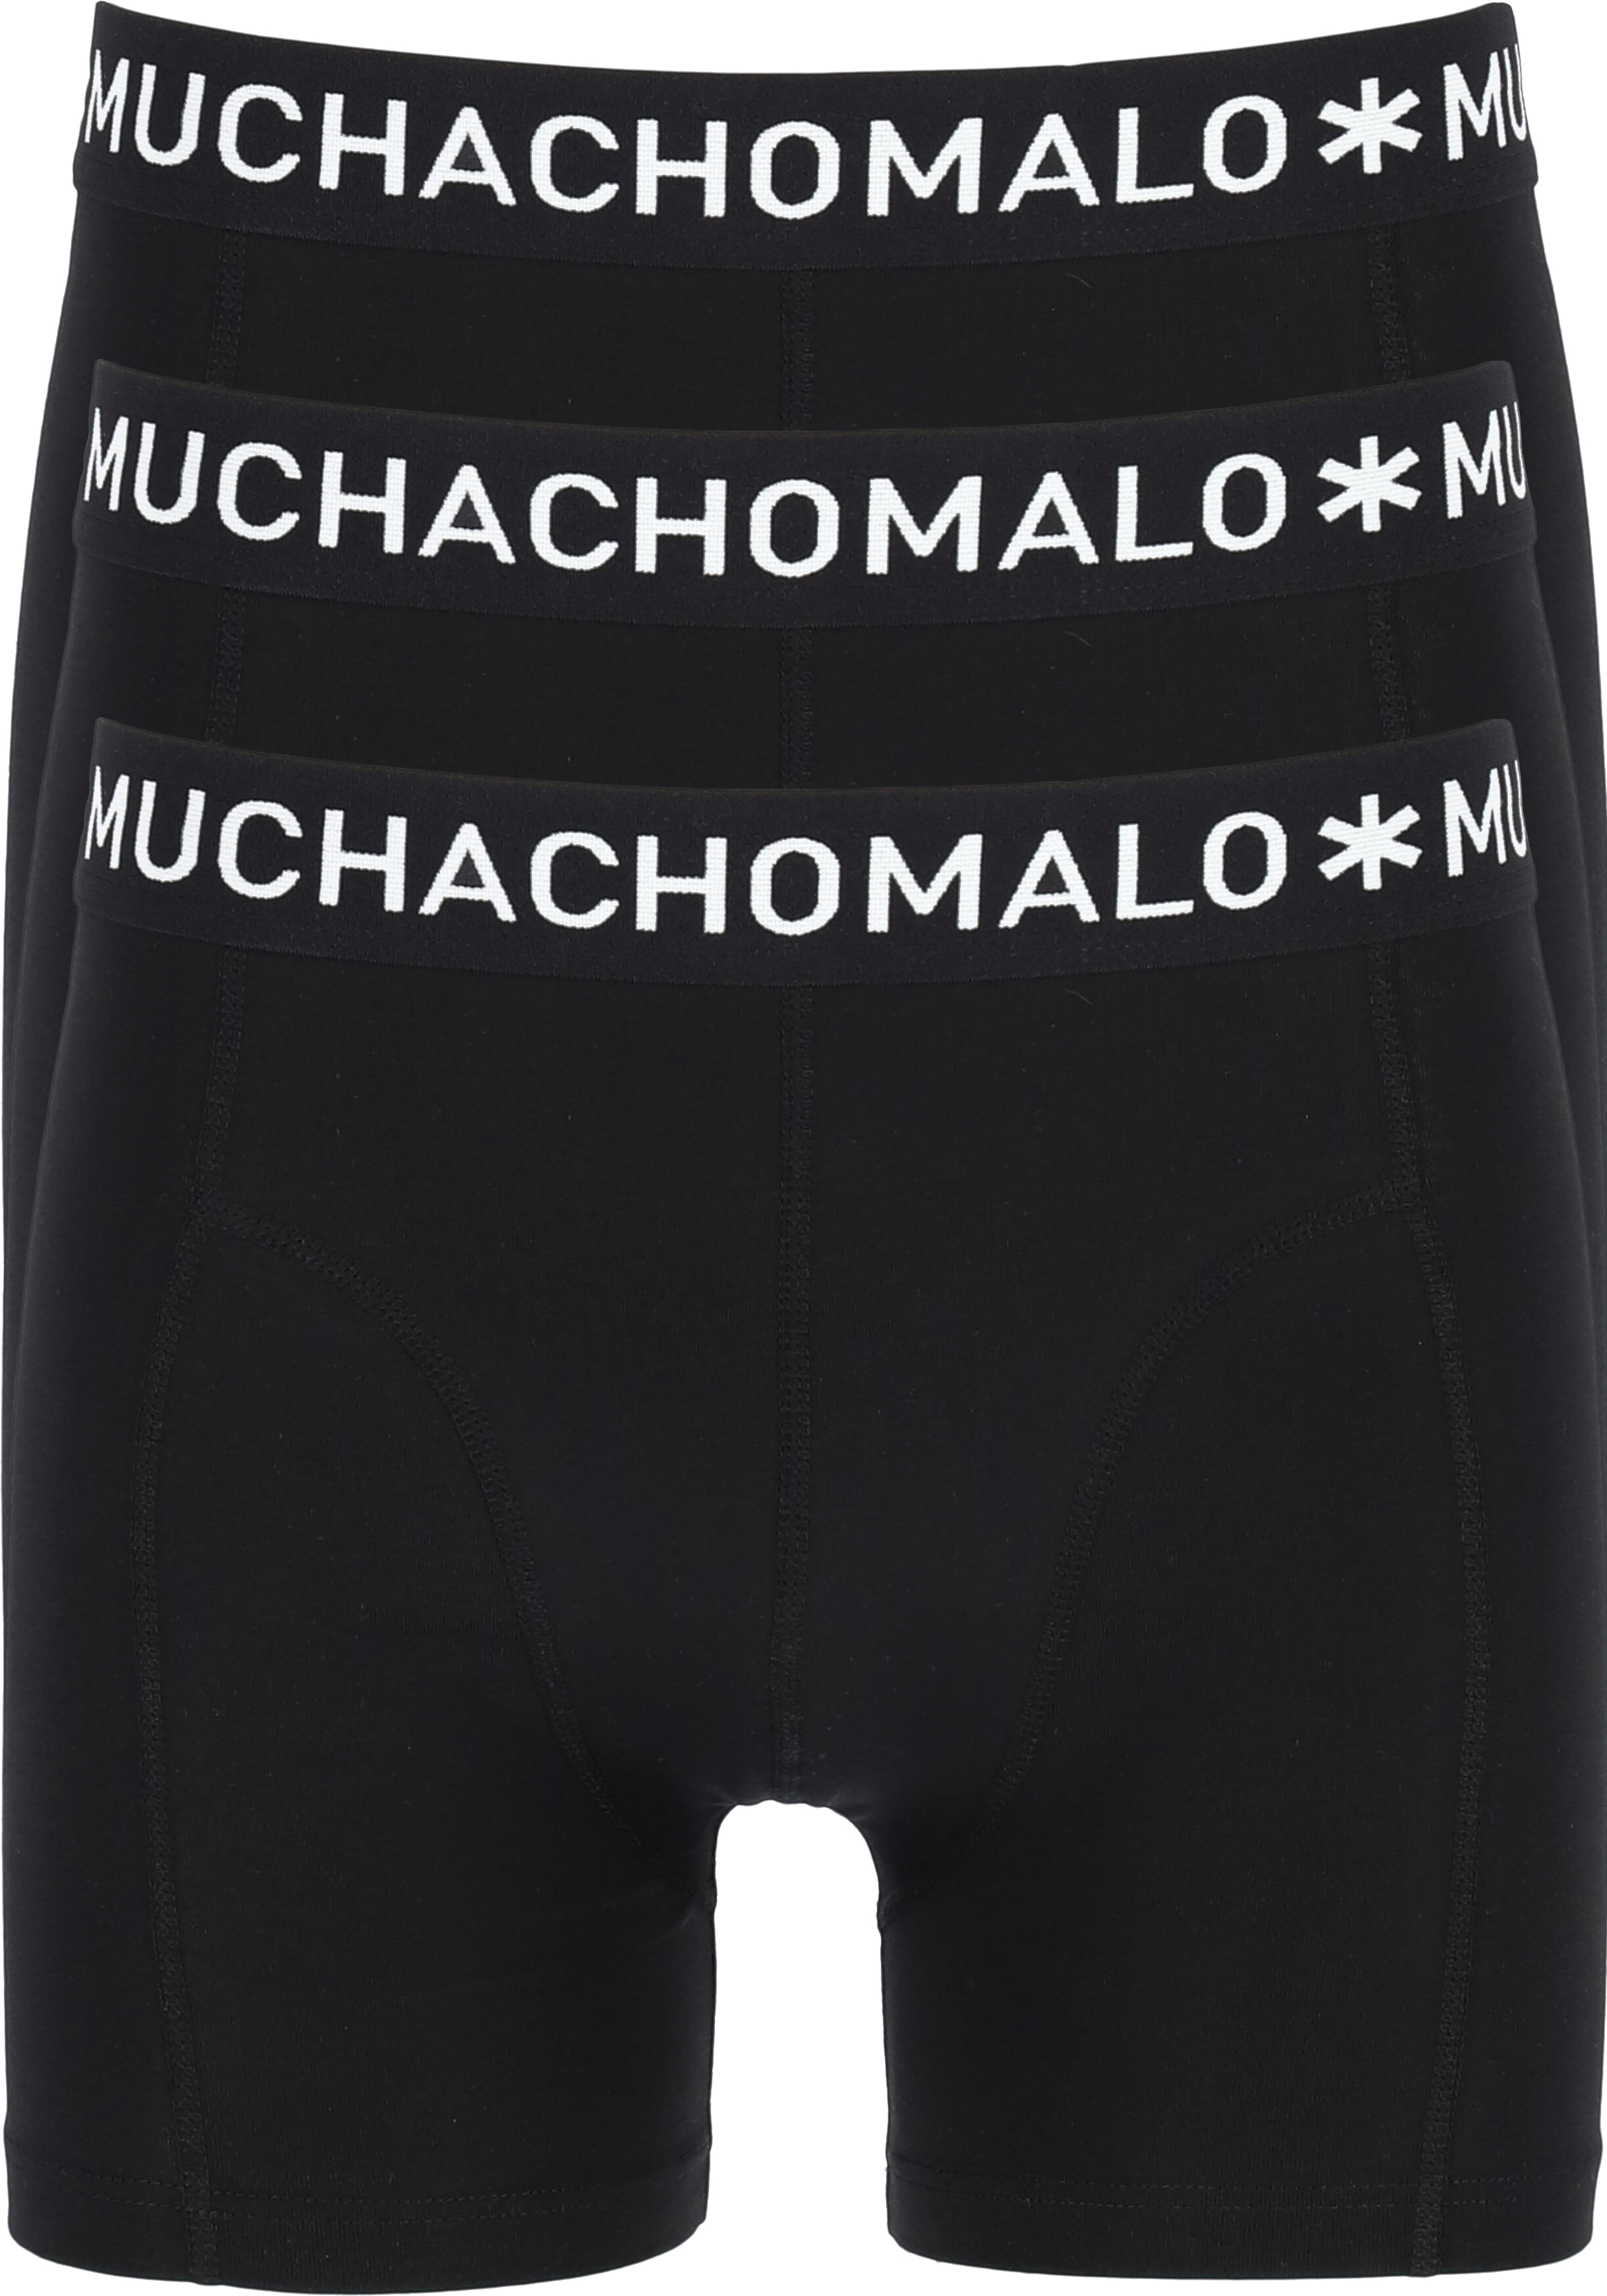 Muchachomalo boxershorts (3-pack), heren boxers normale lengte, zwart  